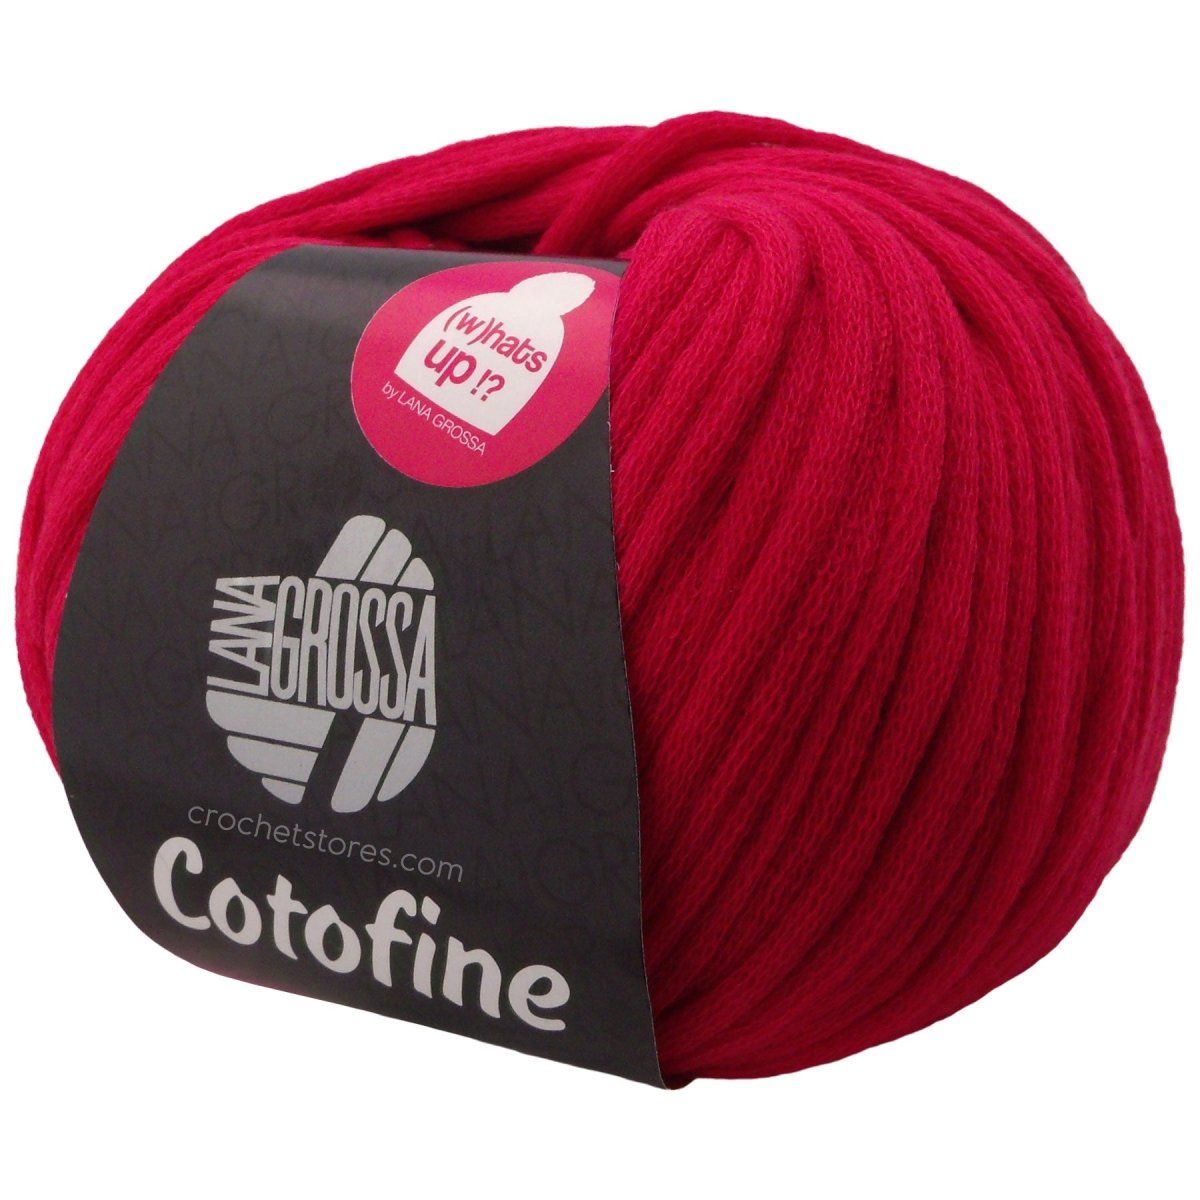 COTOFINE - Crochetstores276-00034033493119627